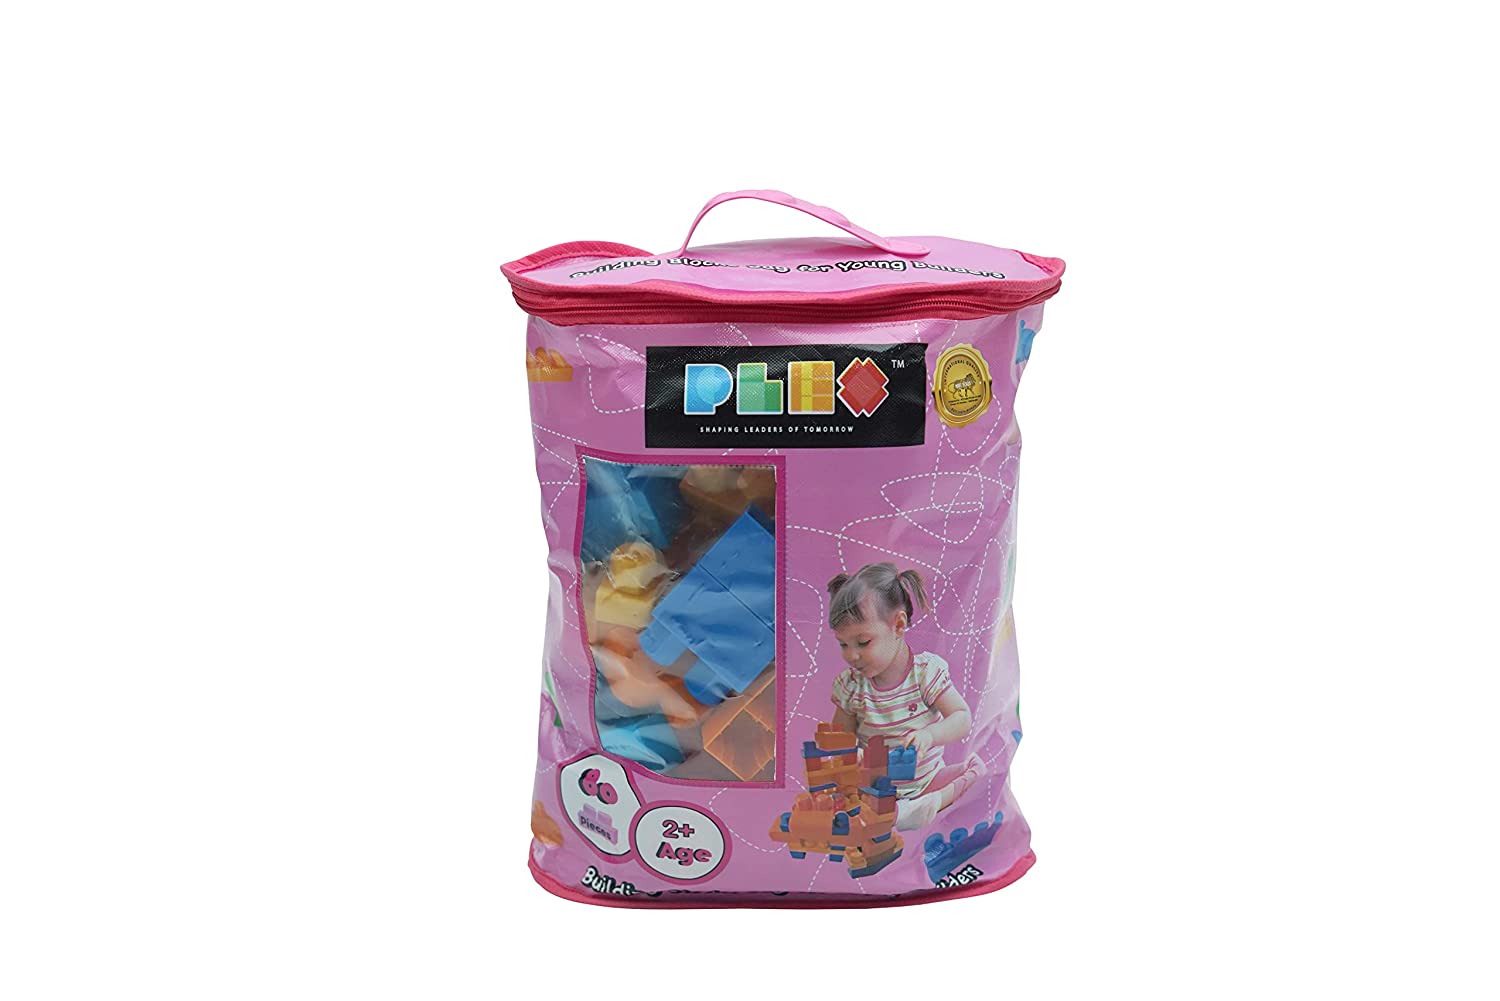 Plex 80 Pcs Building Blocks Bag Pack - Pink